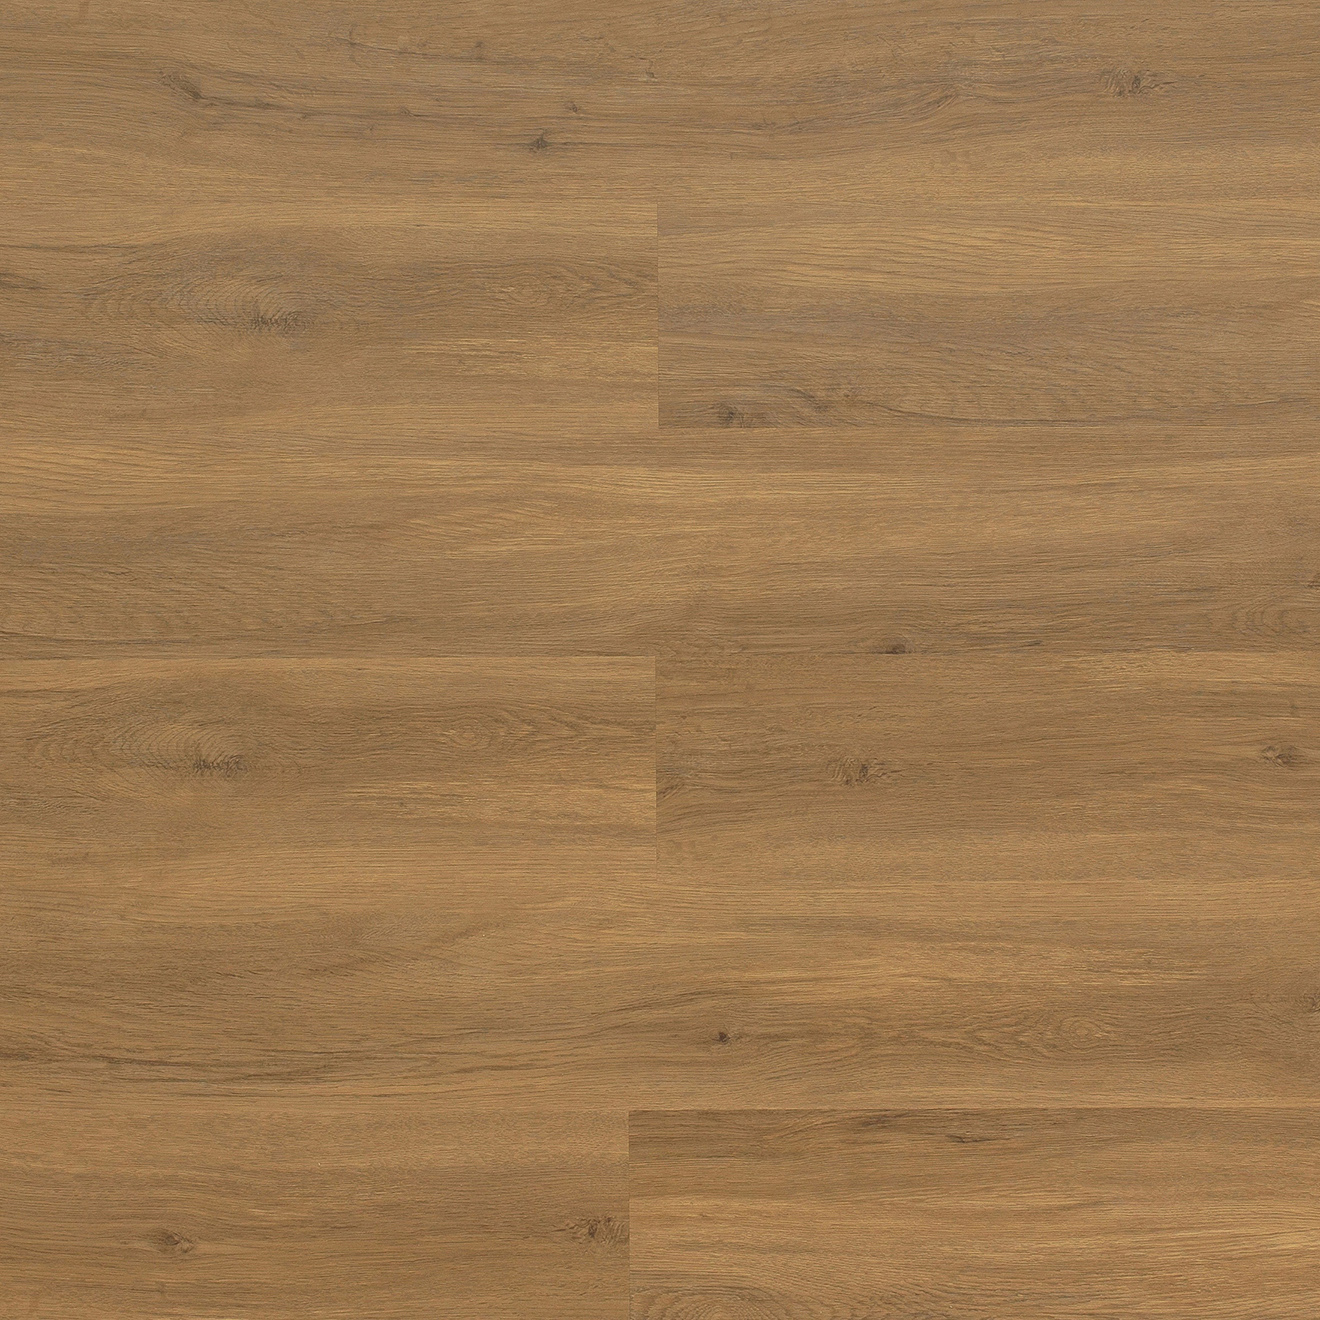 Amrak Oak colour COLORITO Luxury Vinyl Tile Flooring ECO Vinyl Click Plank (Anti-bacterial)